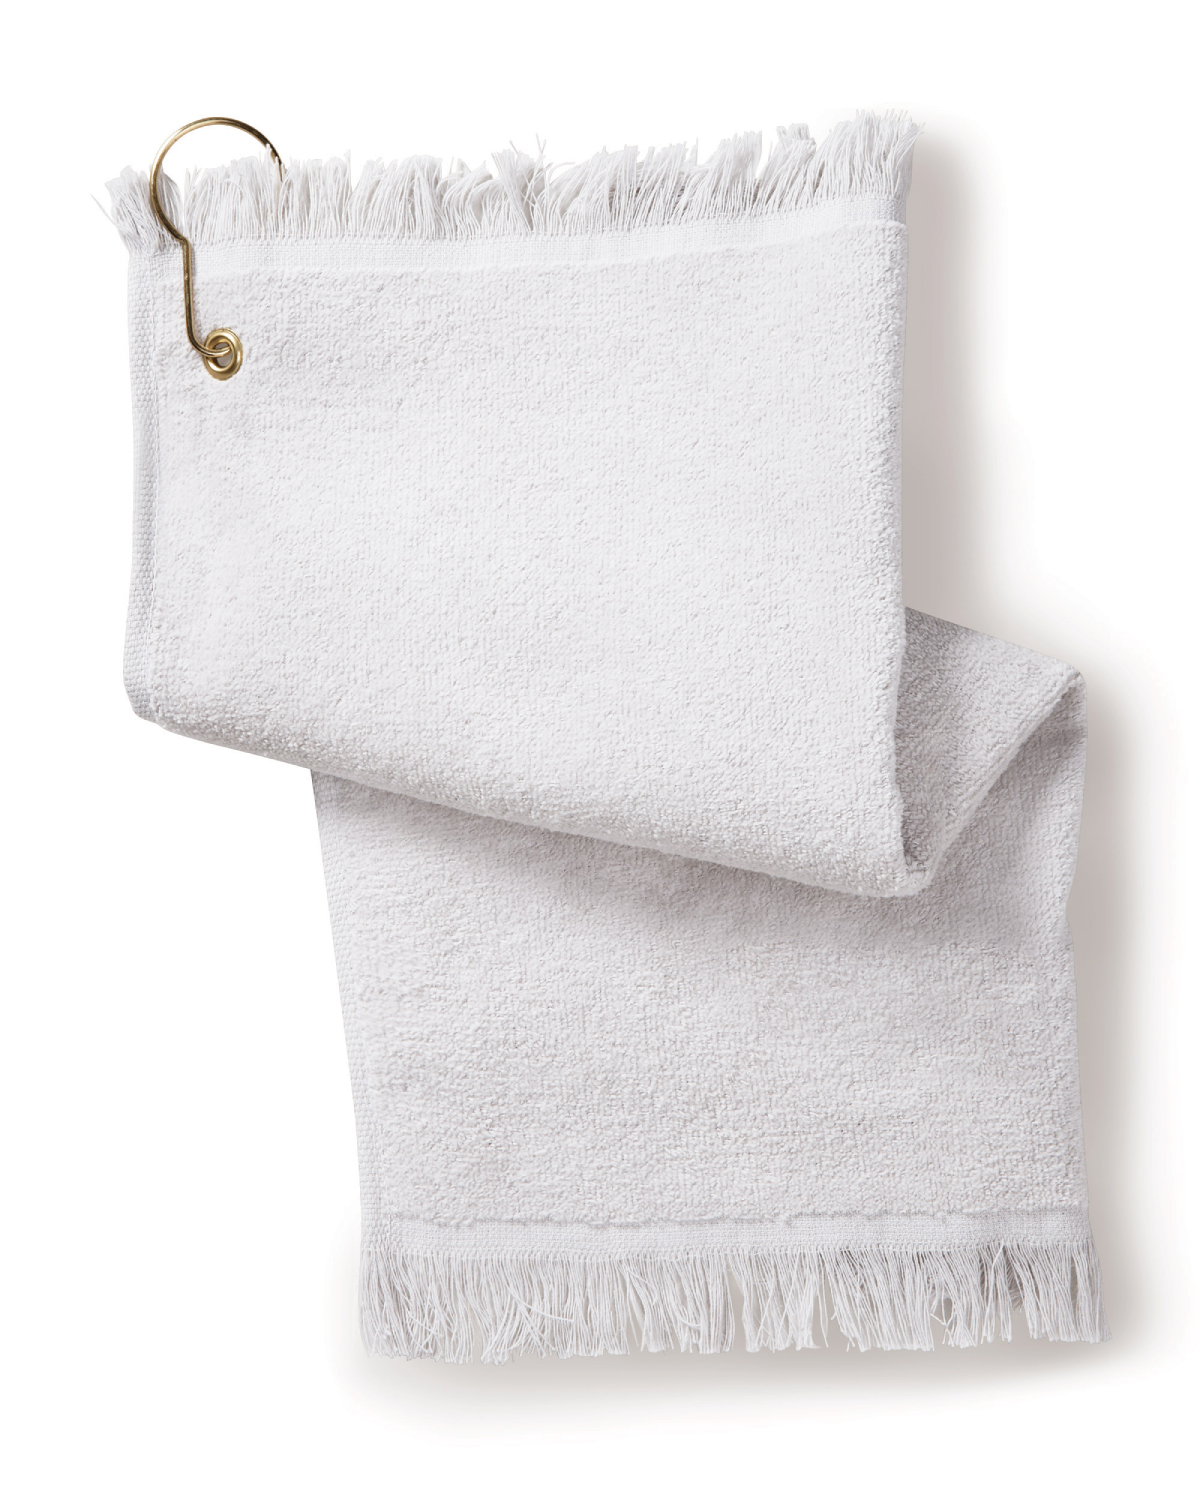 Fingertip Towel Grommet T60GH T101 T600 T68GH T68TH T680 T640 SALE Towels Plus 